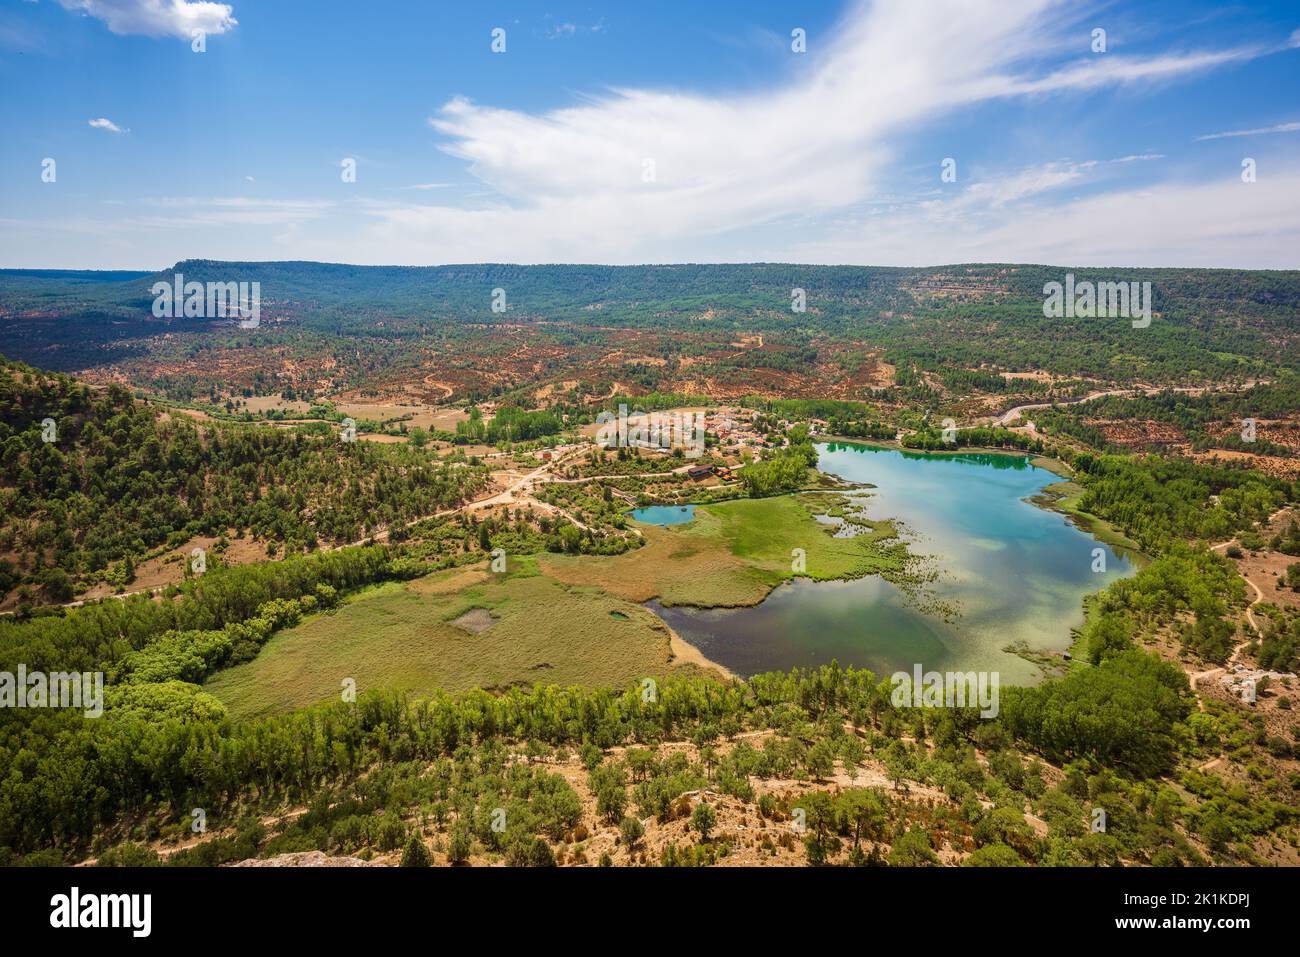 Idyllic scenic view of natural area in an area known as España Vacia. Uña Lake, Serranía de Cuenca, Spain Stock Photo